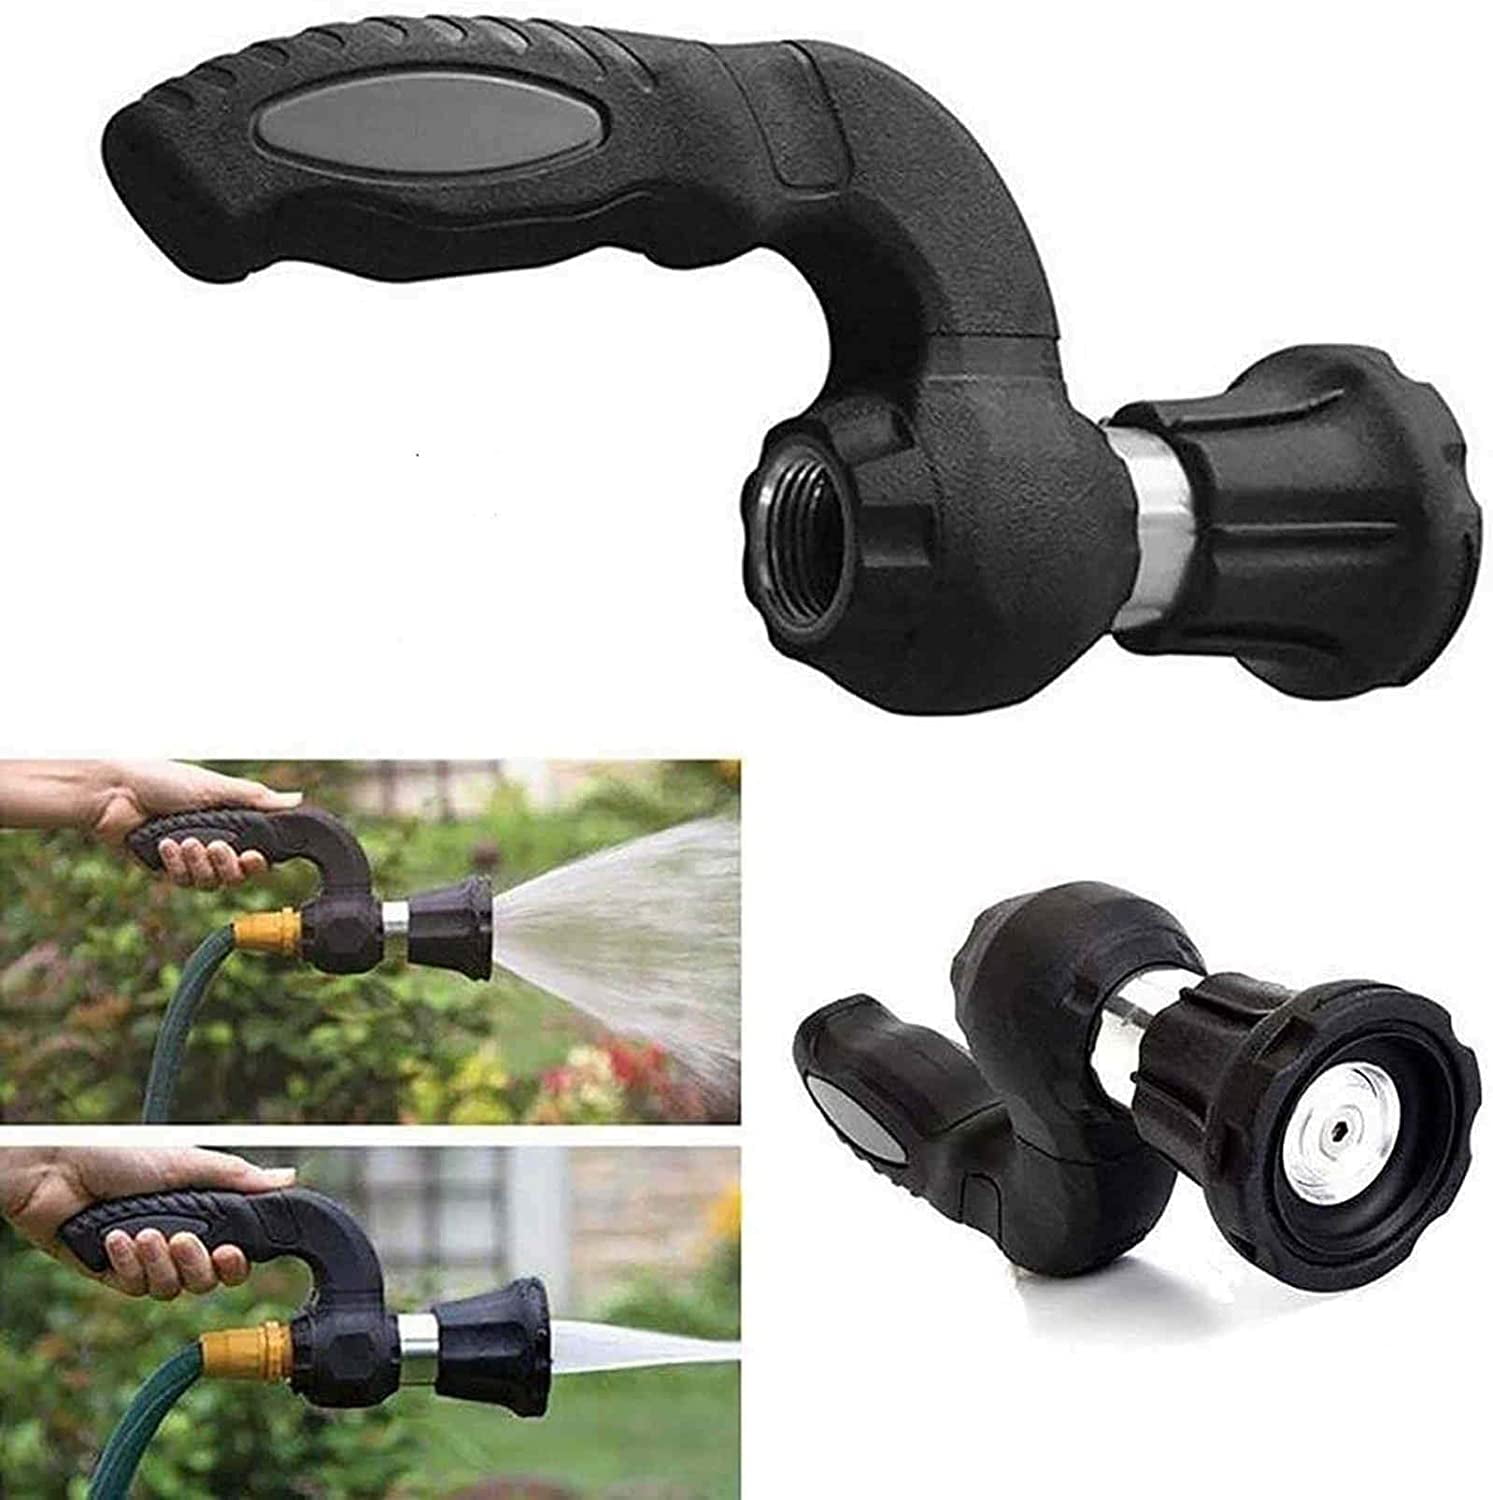 Mighty Power Hose Blaster Nozzle Lawn Garden Car Washing Power Water Spray VID 